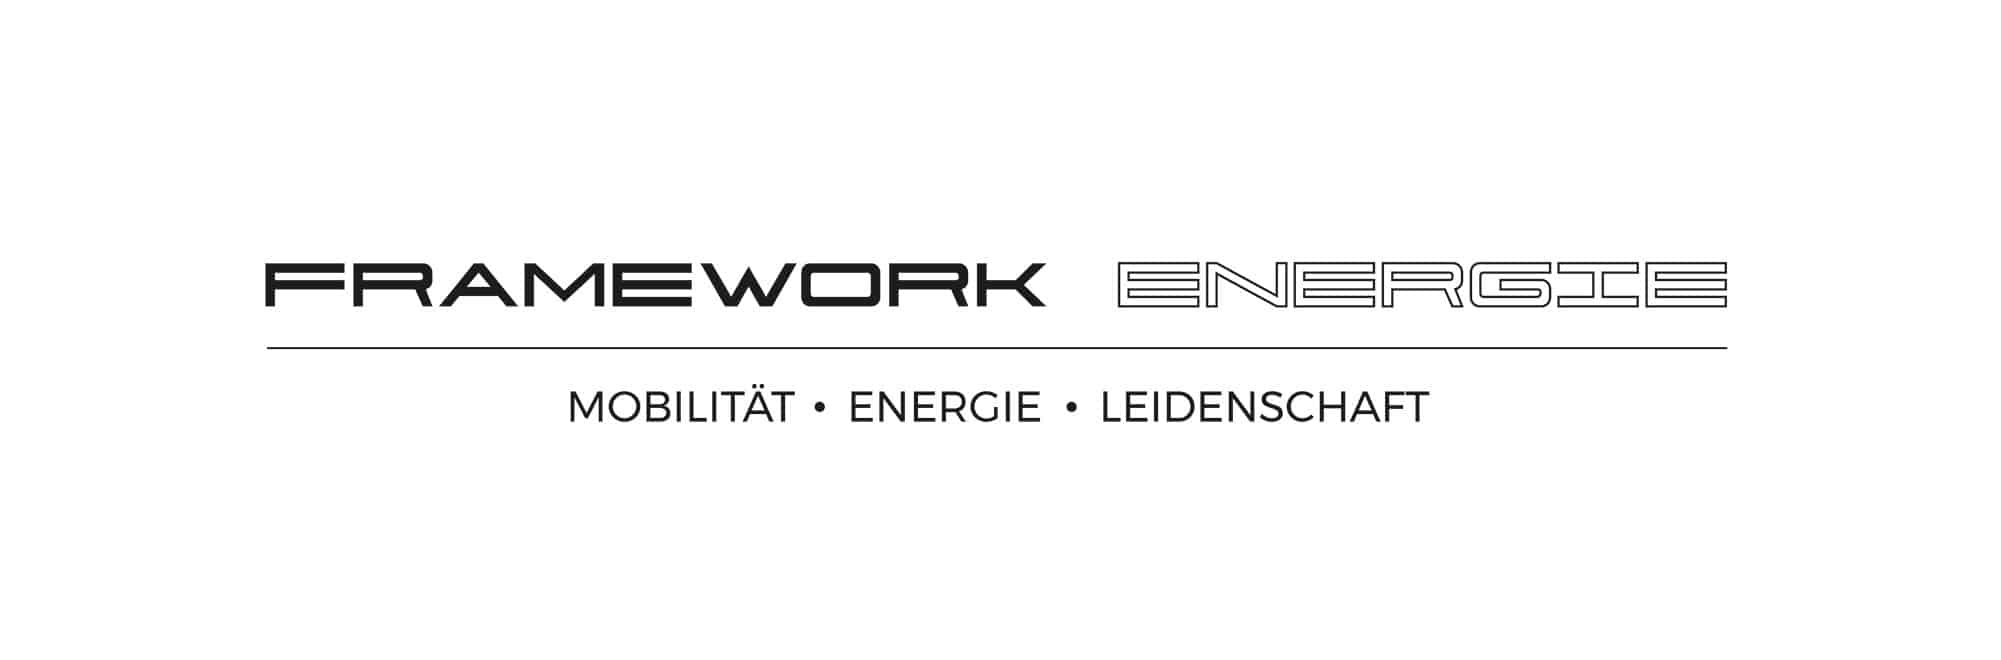 Logo Design - Framework Energie GmbH - Logo Design aus Eckernförde - Schleswig Holstein - Umgebung Kiel - Logo Designer Andrea Baitz